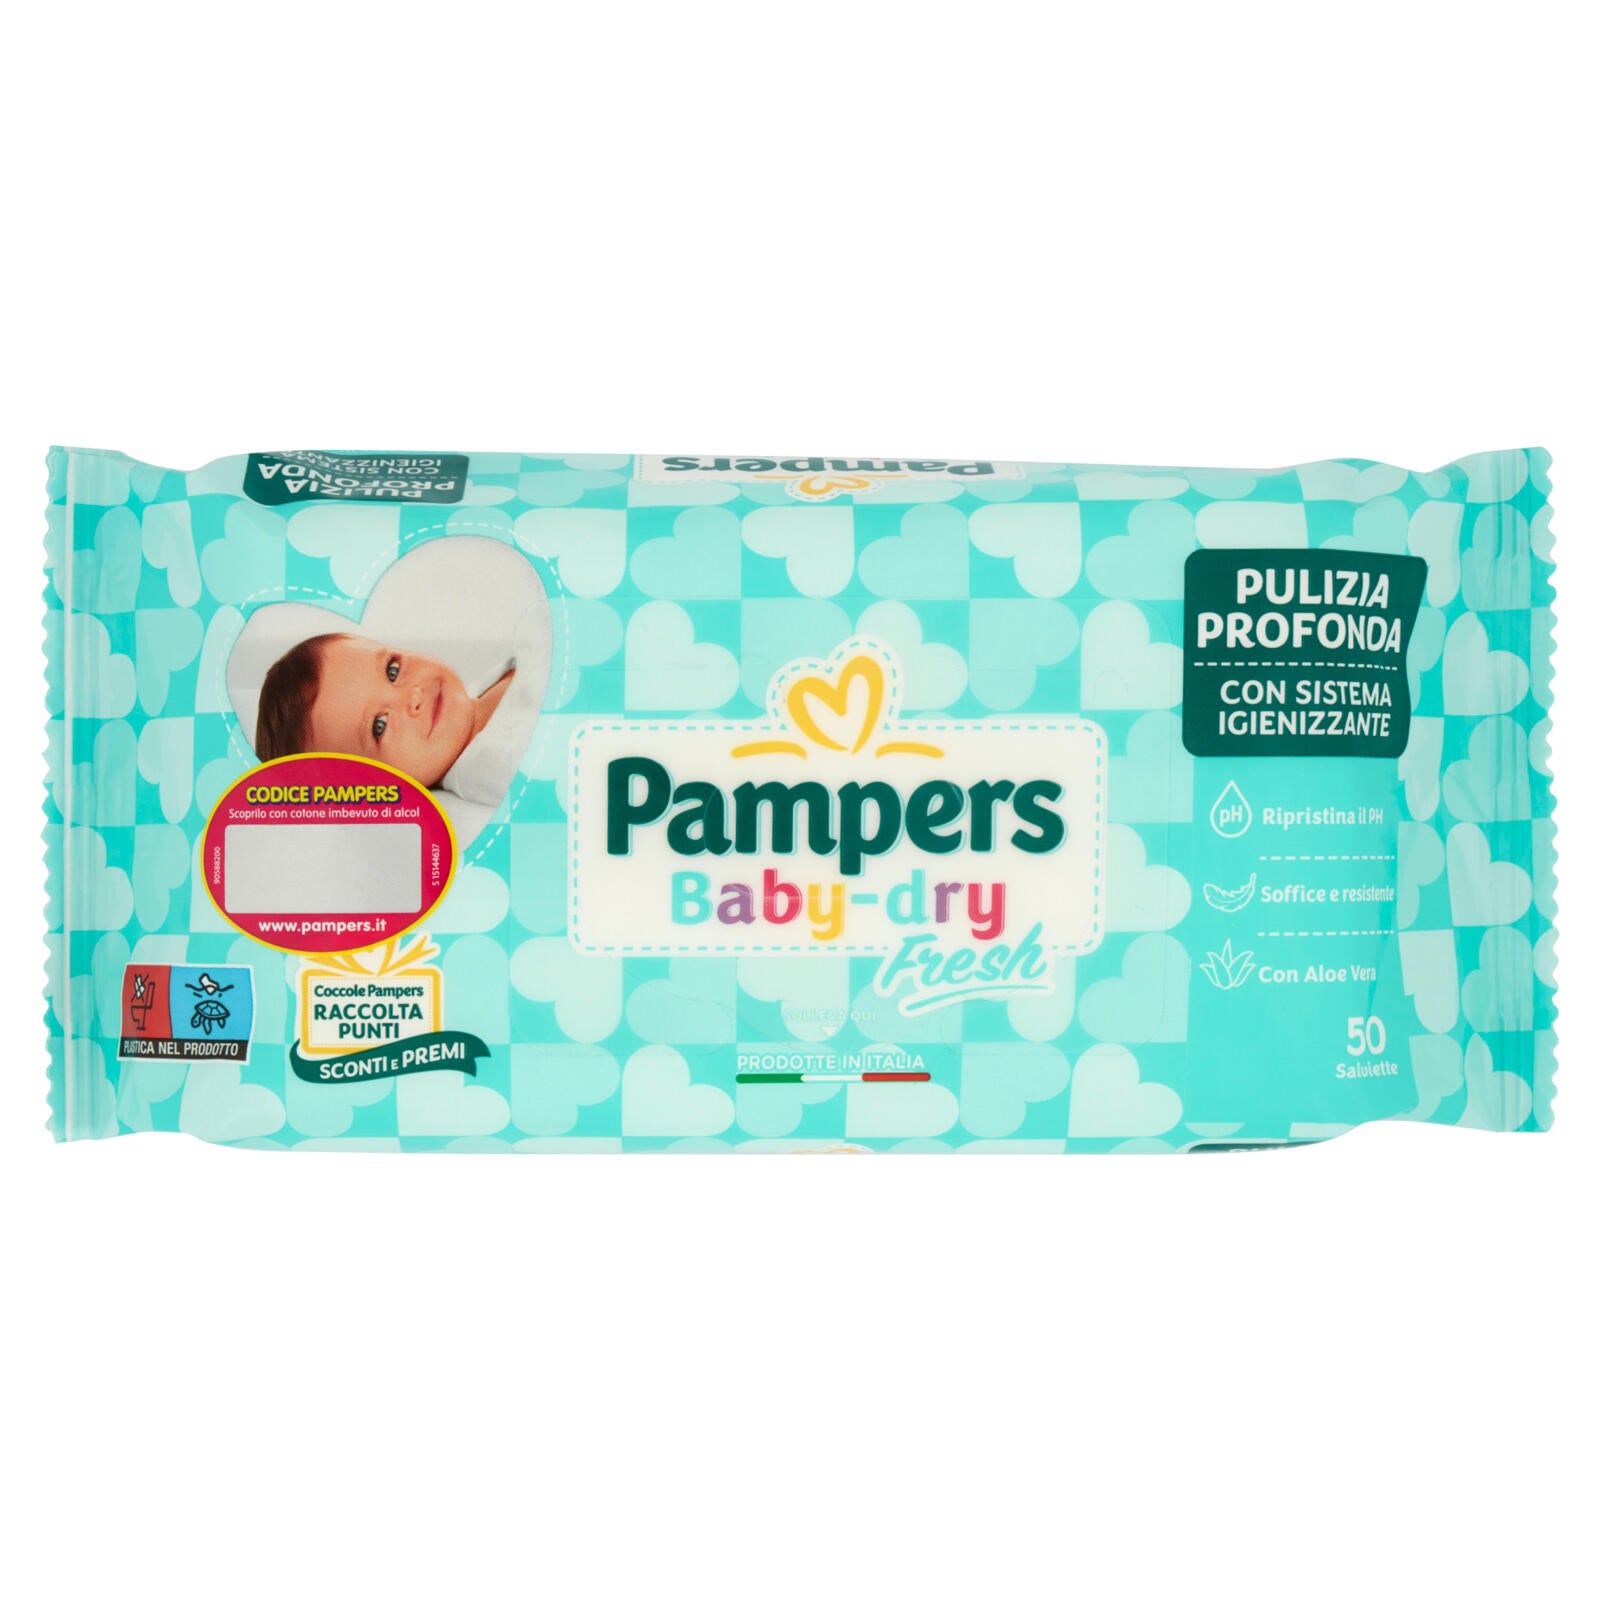 Pampers Baby-dry Fresh Salviette 50 pz ->